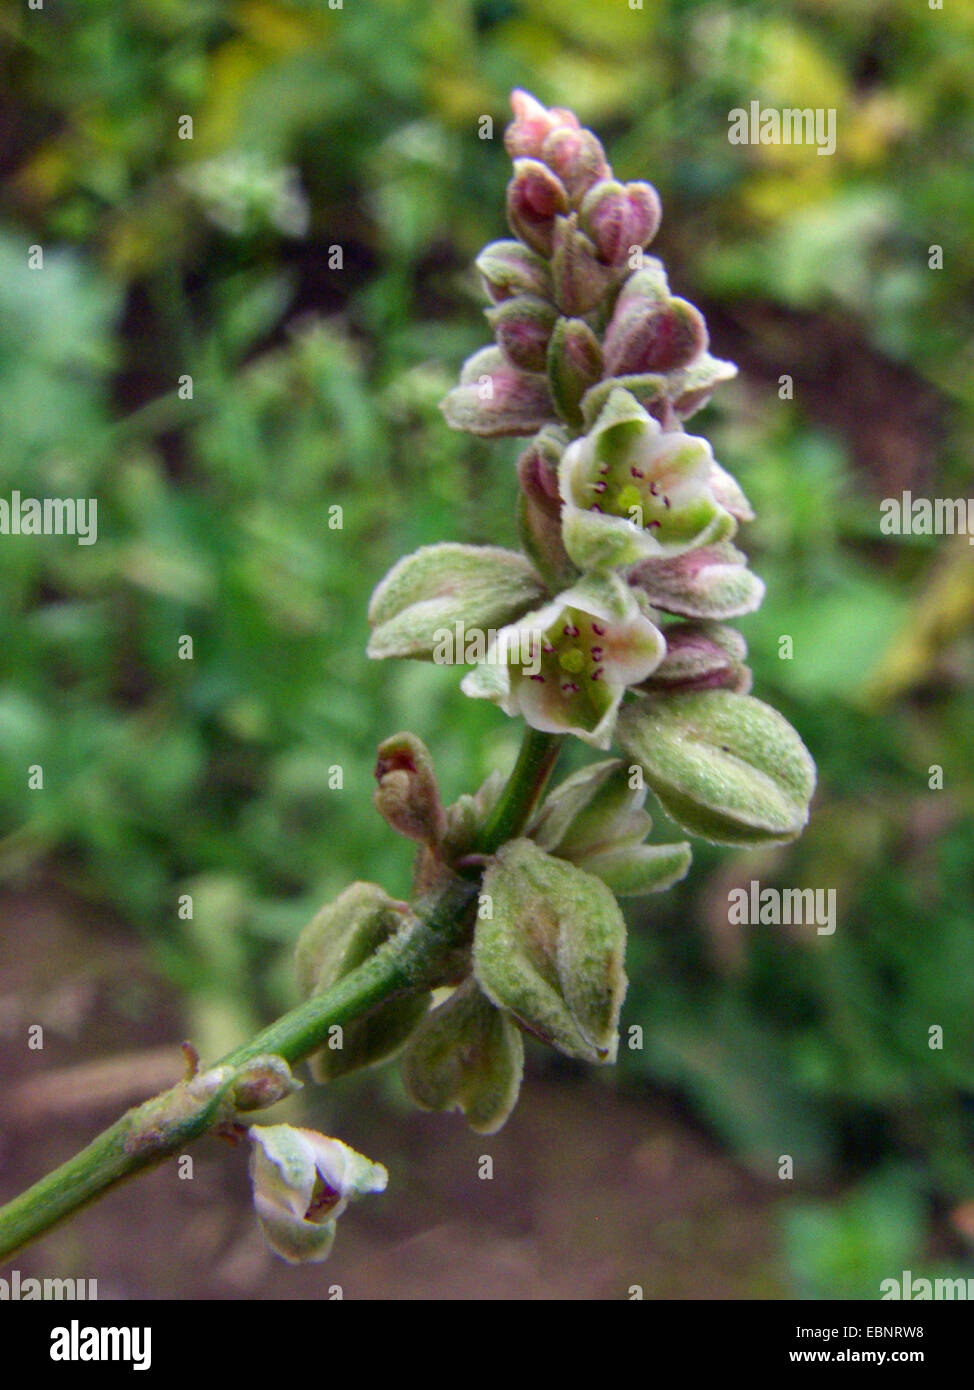 Climbing buckwheat, Black bindweed (Fallopia convolvulus, Polygonum convolvulus, Bilderdykia convolvulus), inflorescence, Germany Stock Photo